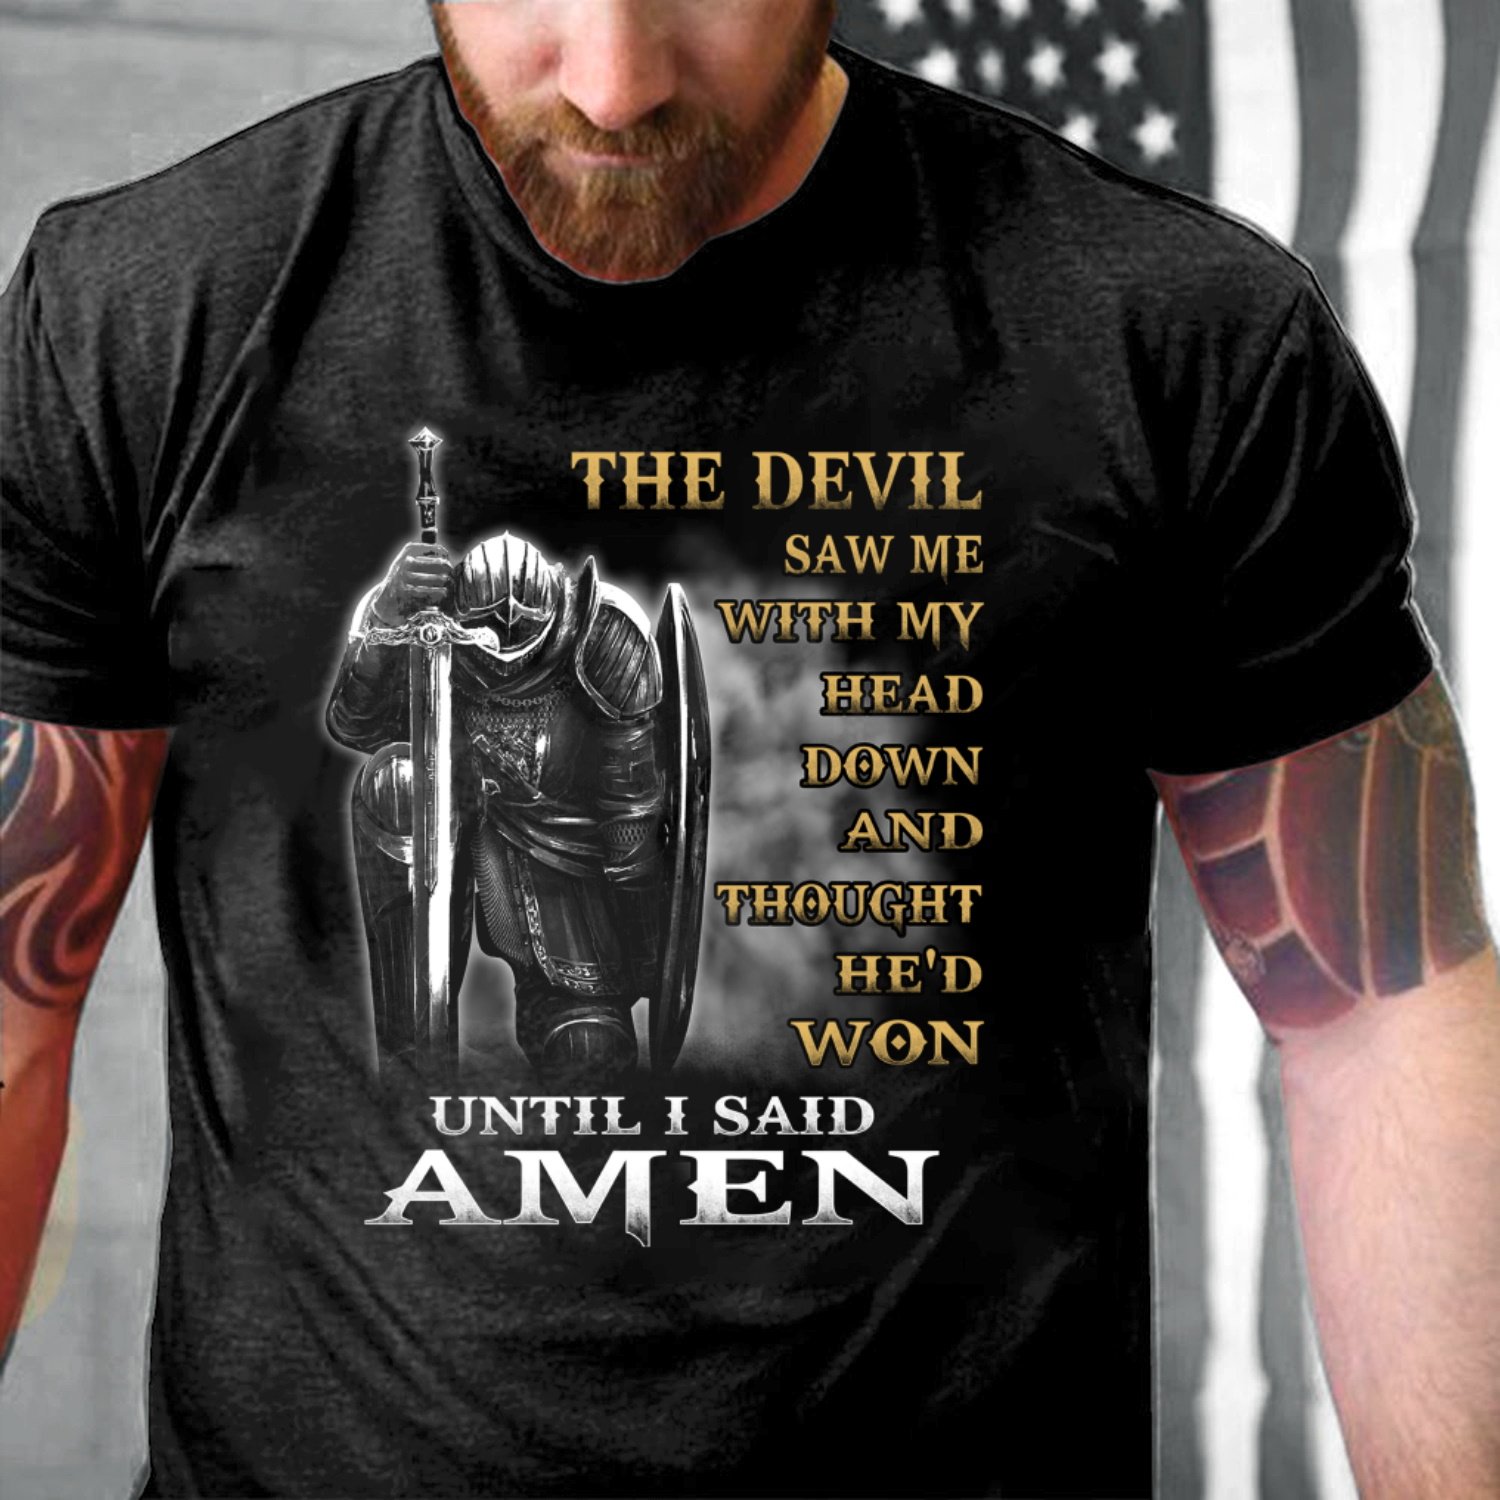 Veterans Shirt - The Devil Saw Me With My Head Down Until I Said Amen T-Shirt